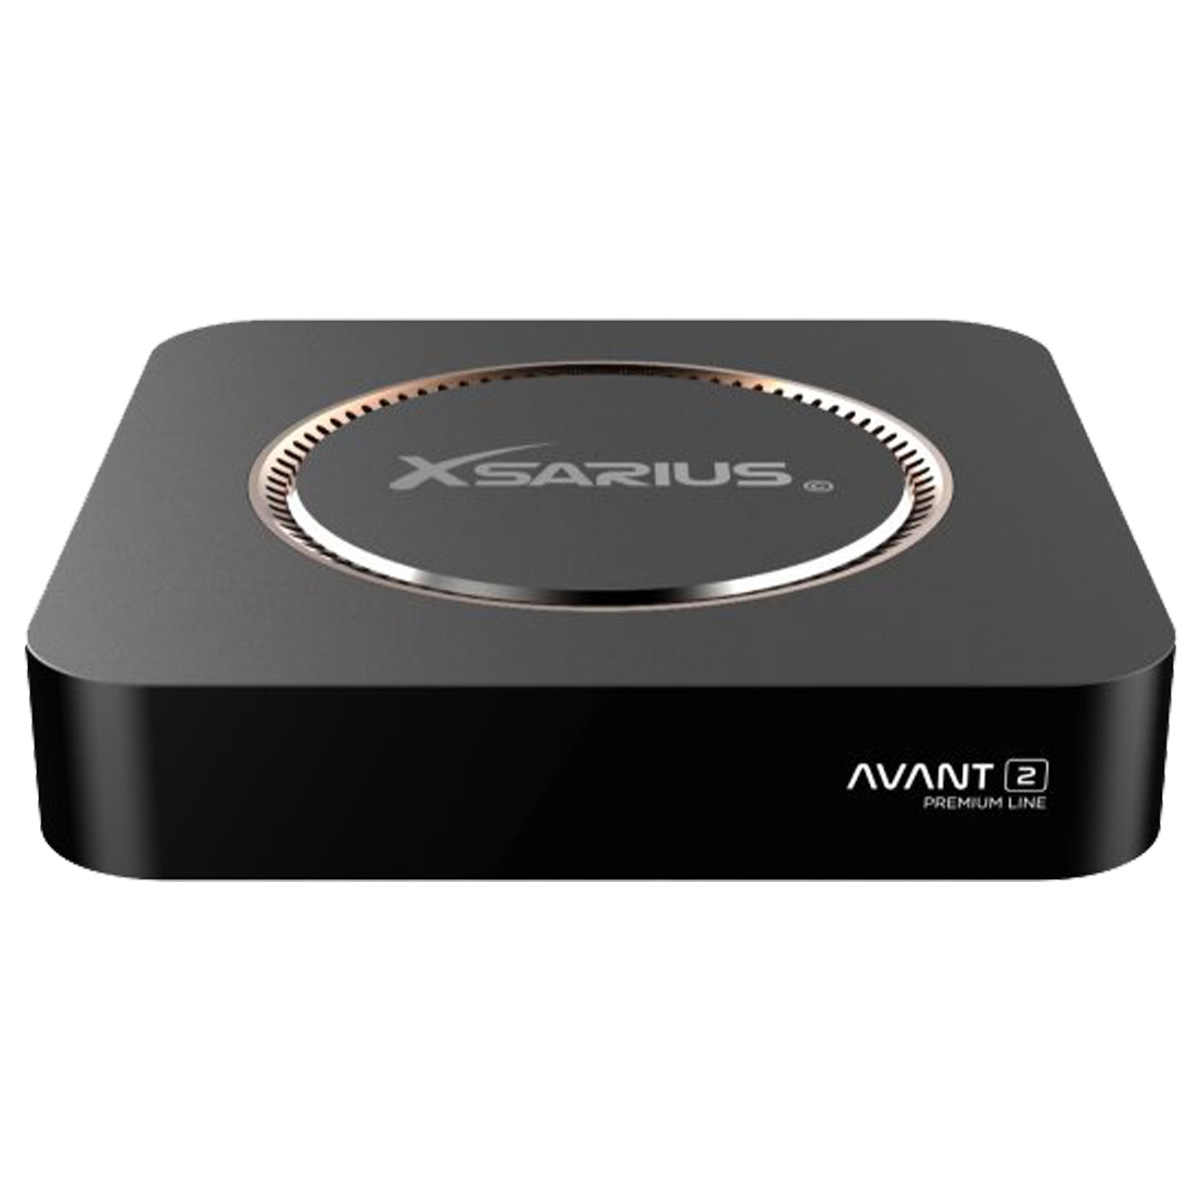 Xsarius AVANT 2 Android 9.0 IP-Receiver 4K UHD, H.265 HEVC, 2.4 GHz WiFi, HDMI, USB 3.0, MicroSD